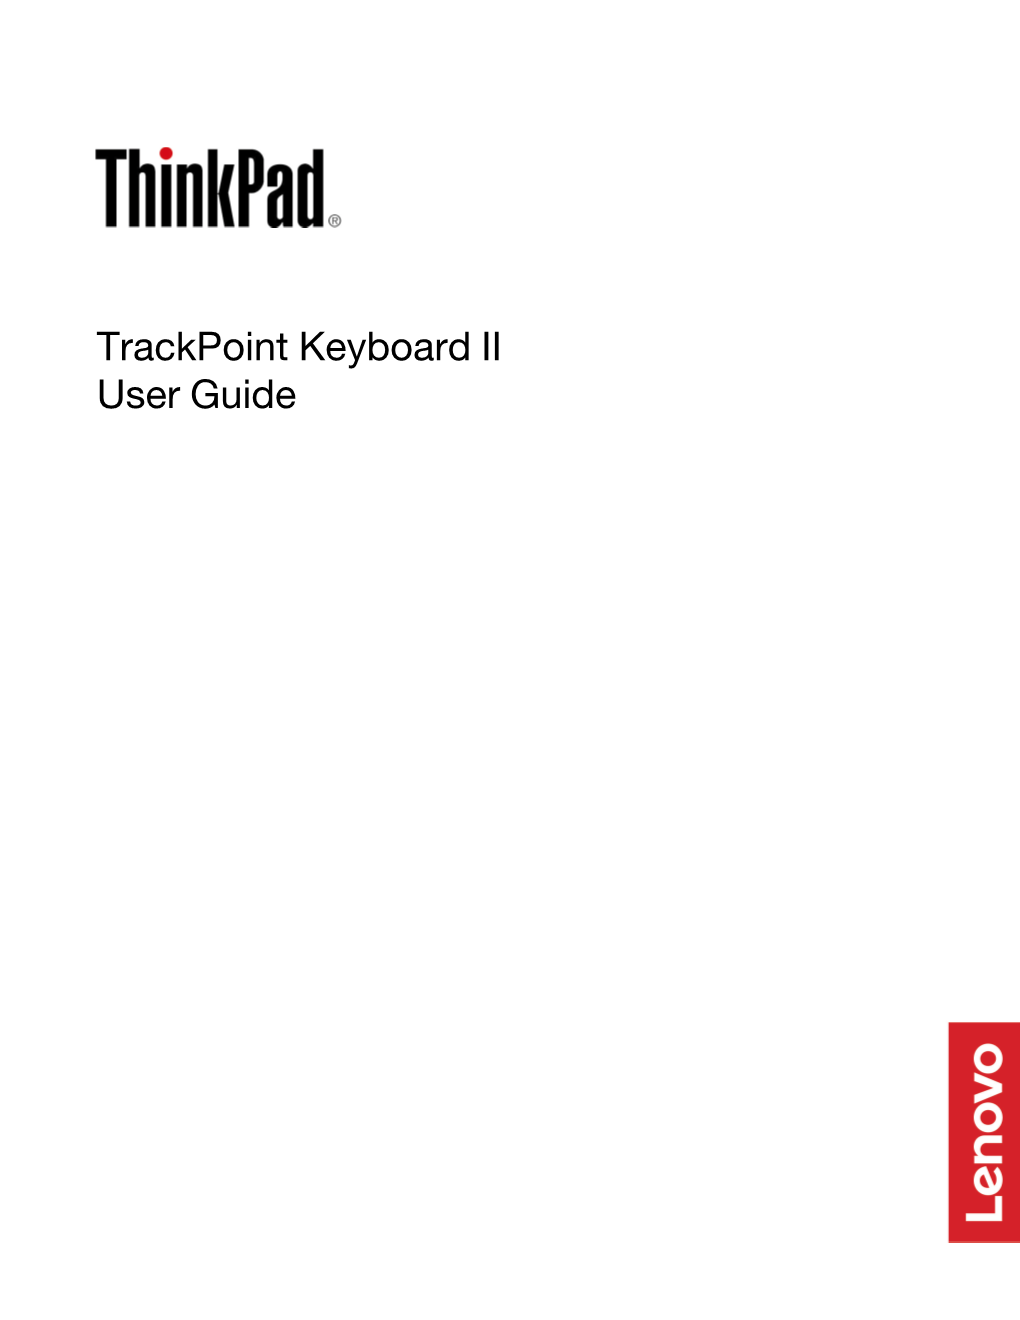 Trackpoint Keyboard II User Guide